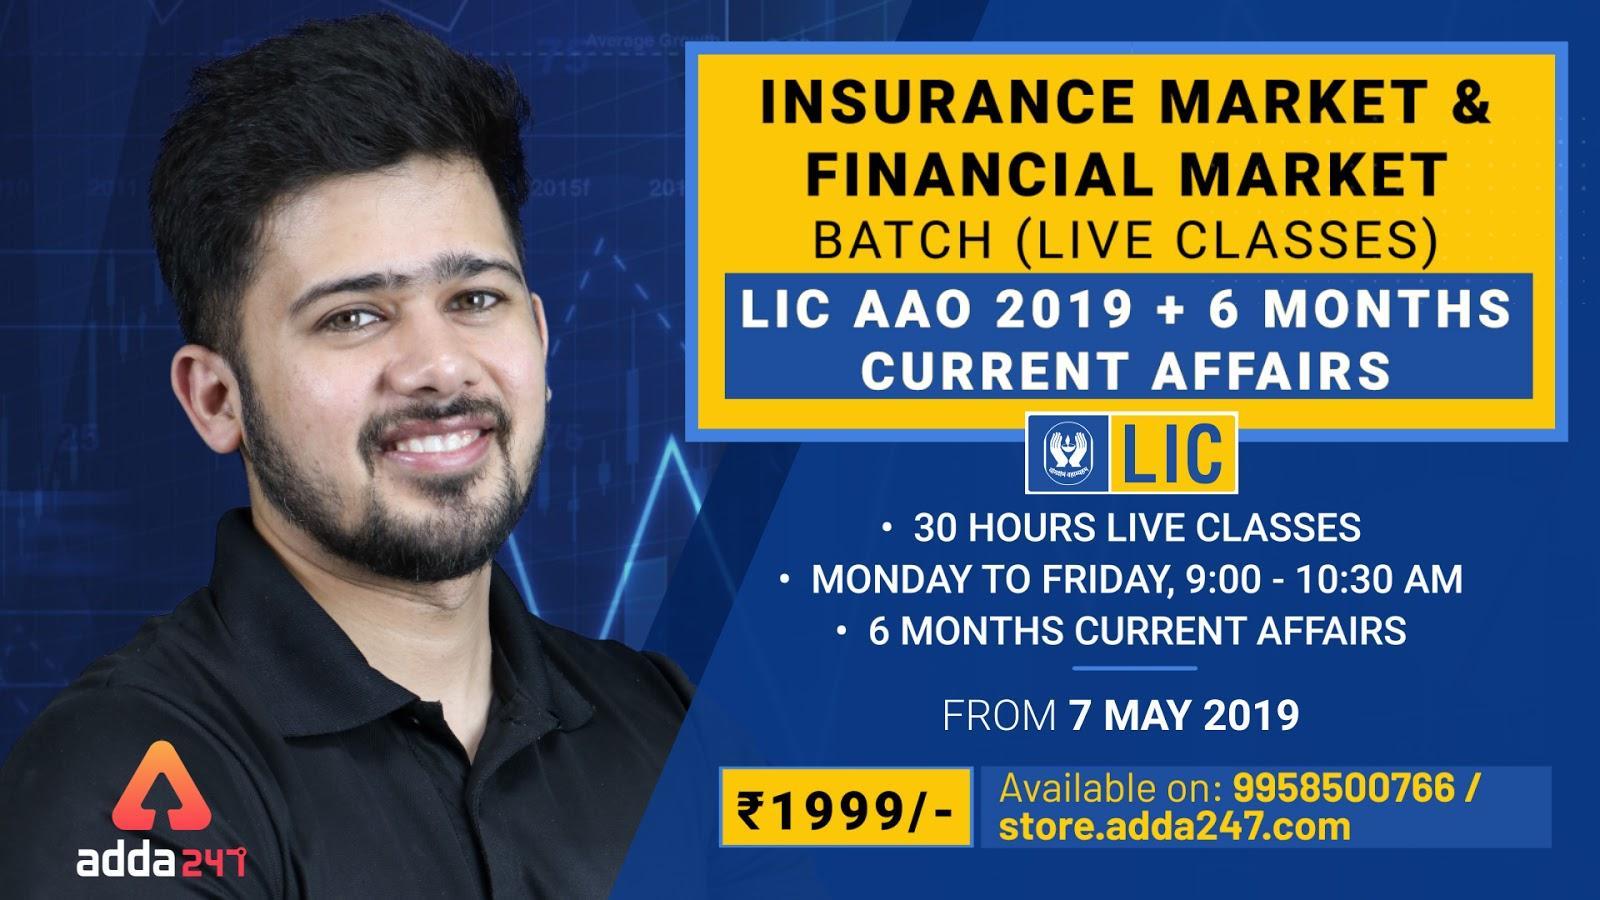 Insurance Market & Financial Market Batch for LIC AAO 2019 by Kush sir.